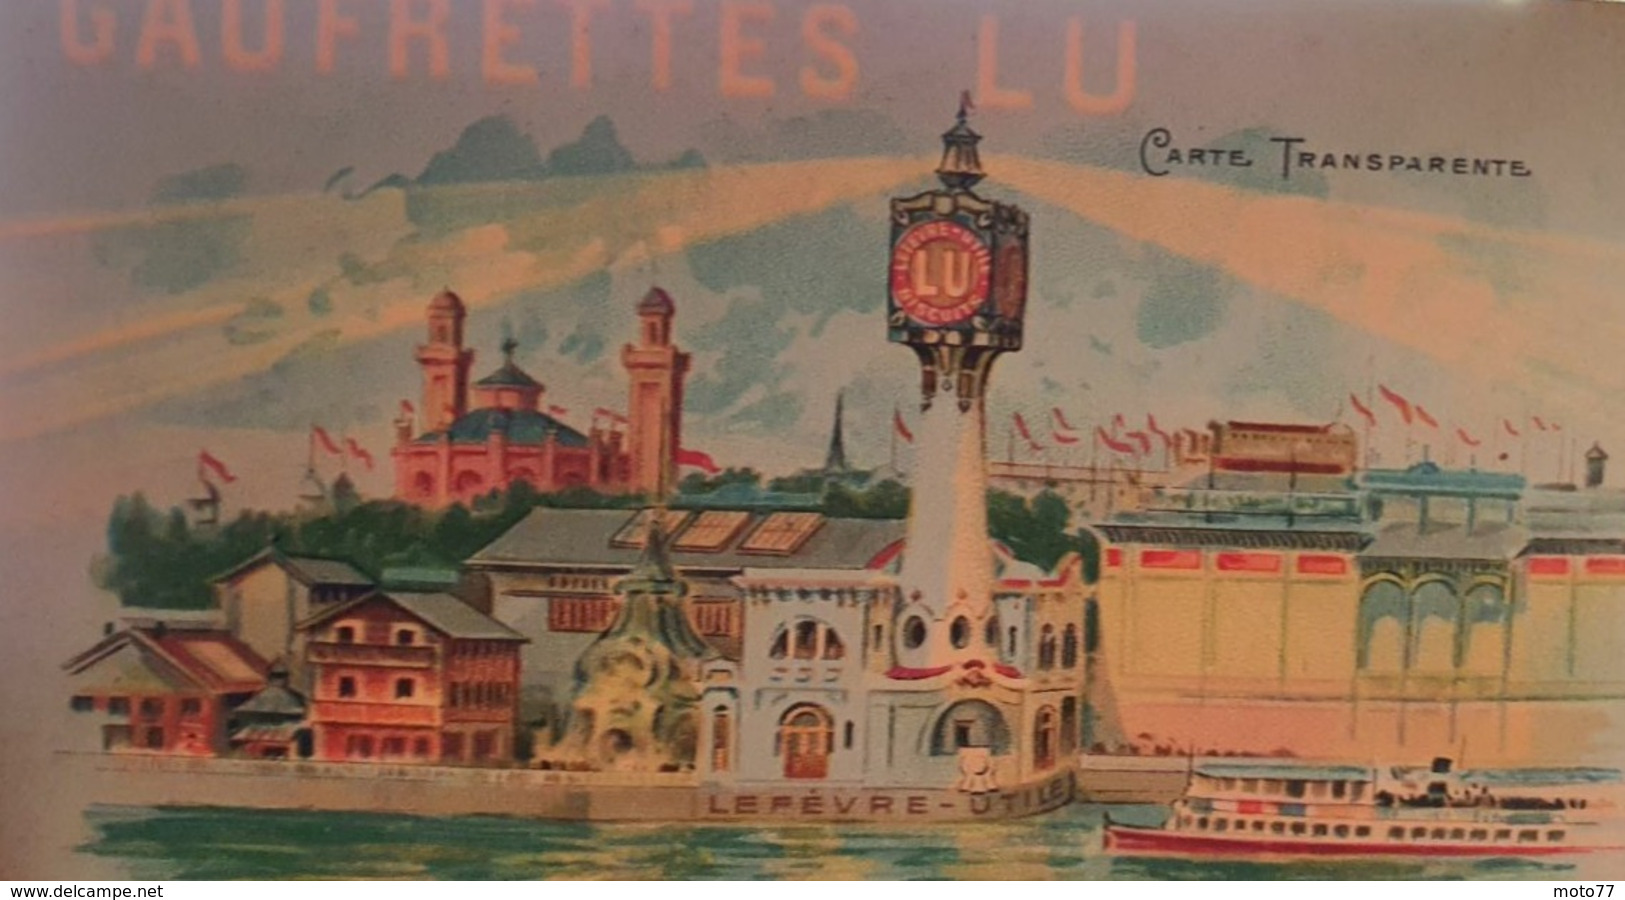 4 CPA cartes postales Chromo - PARIS "TRANSPARENTE" - Lefèvre Utile - vers 1900 - Biscuit LU /42